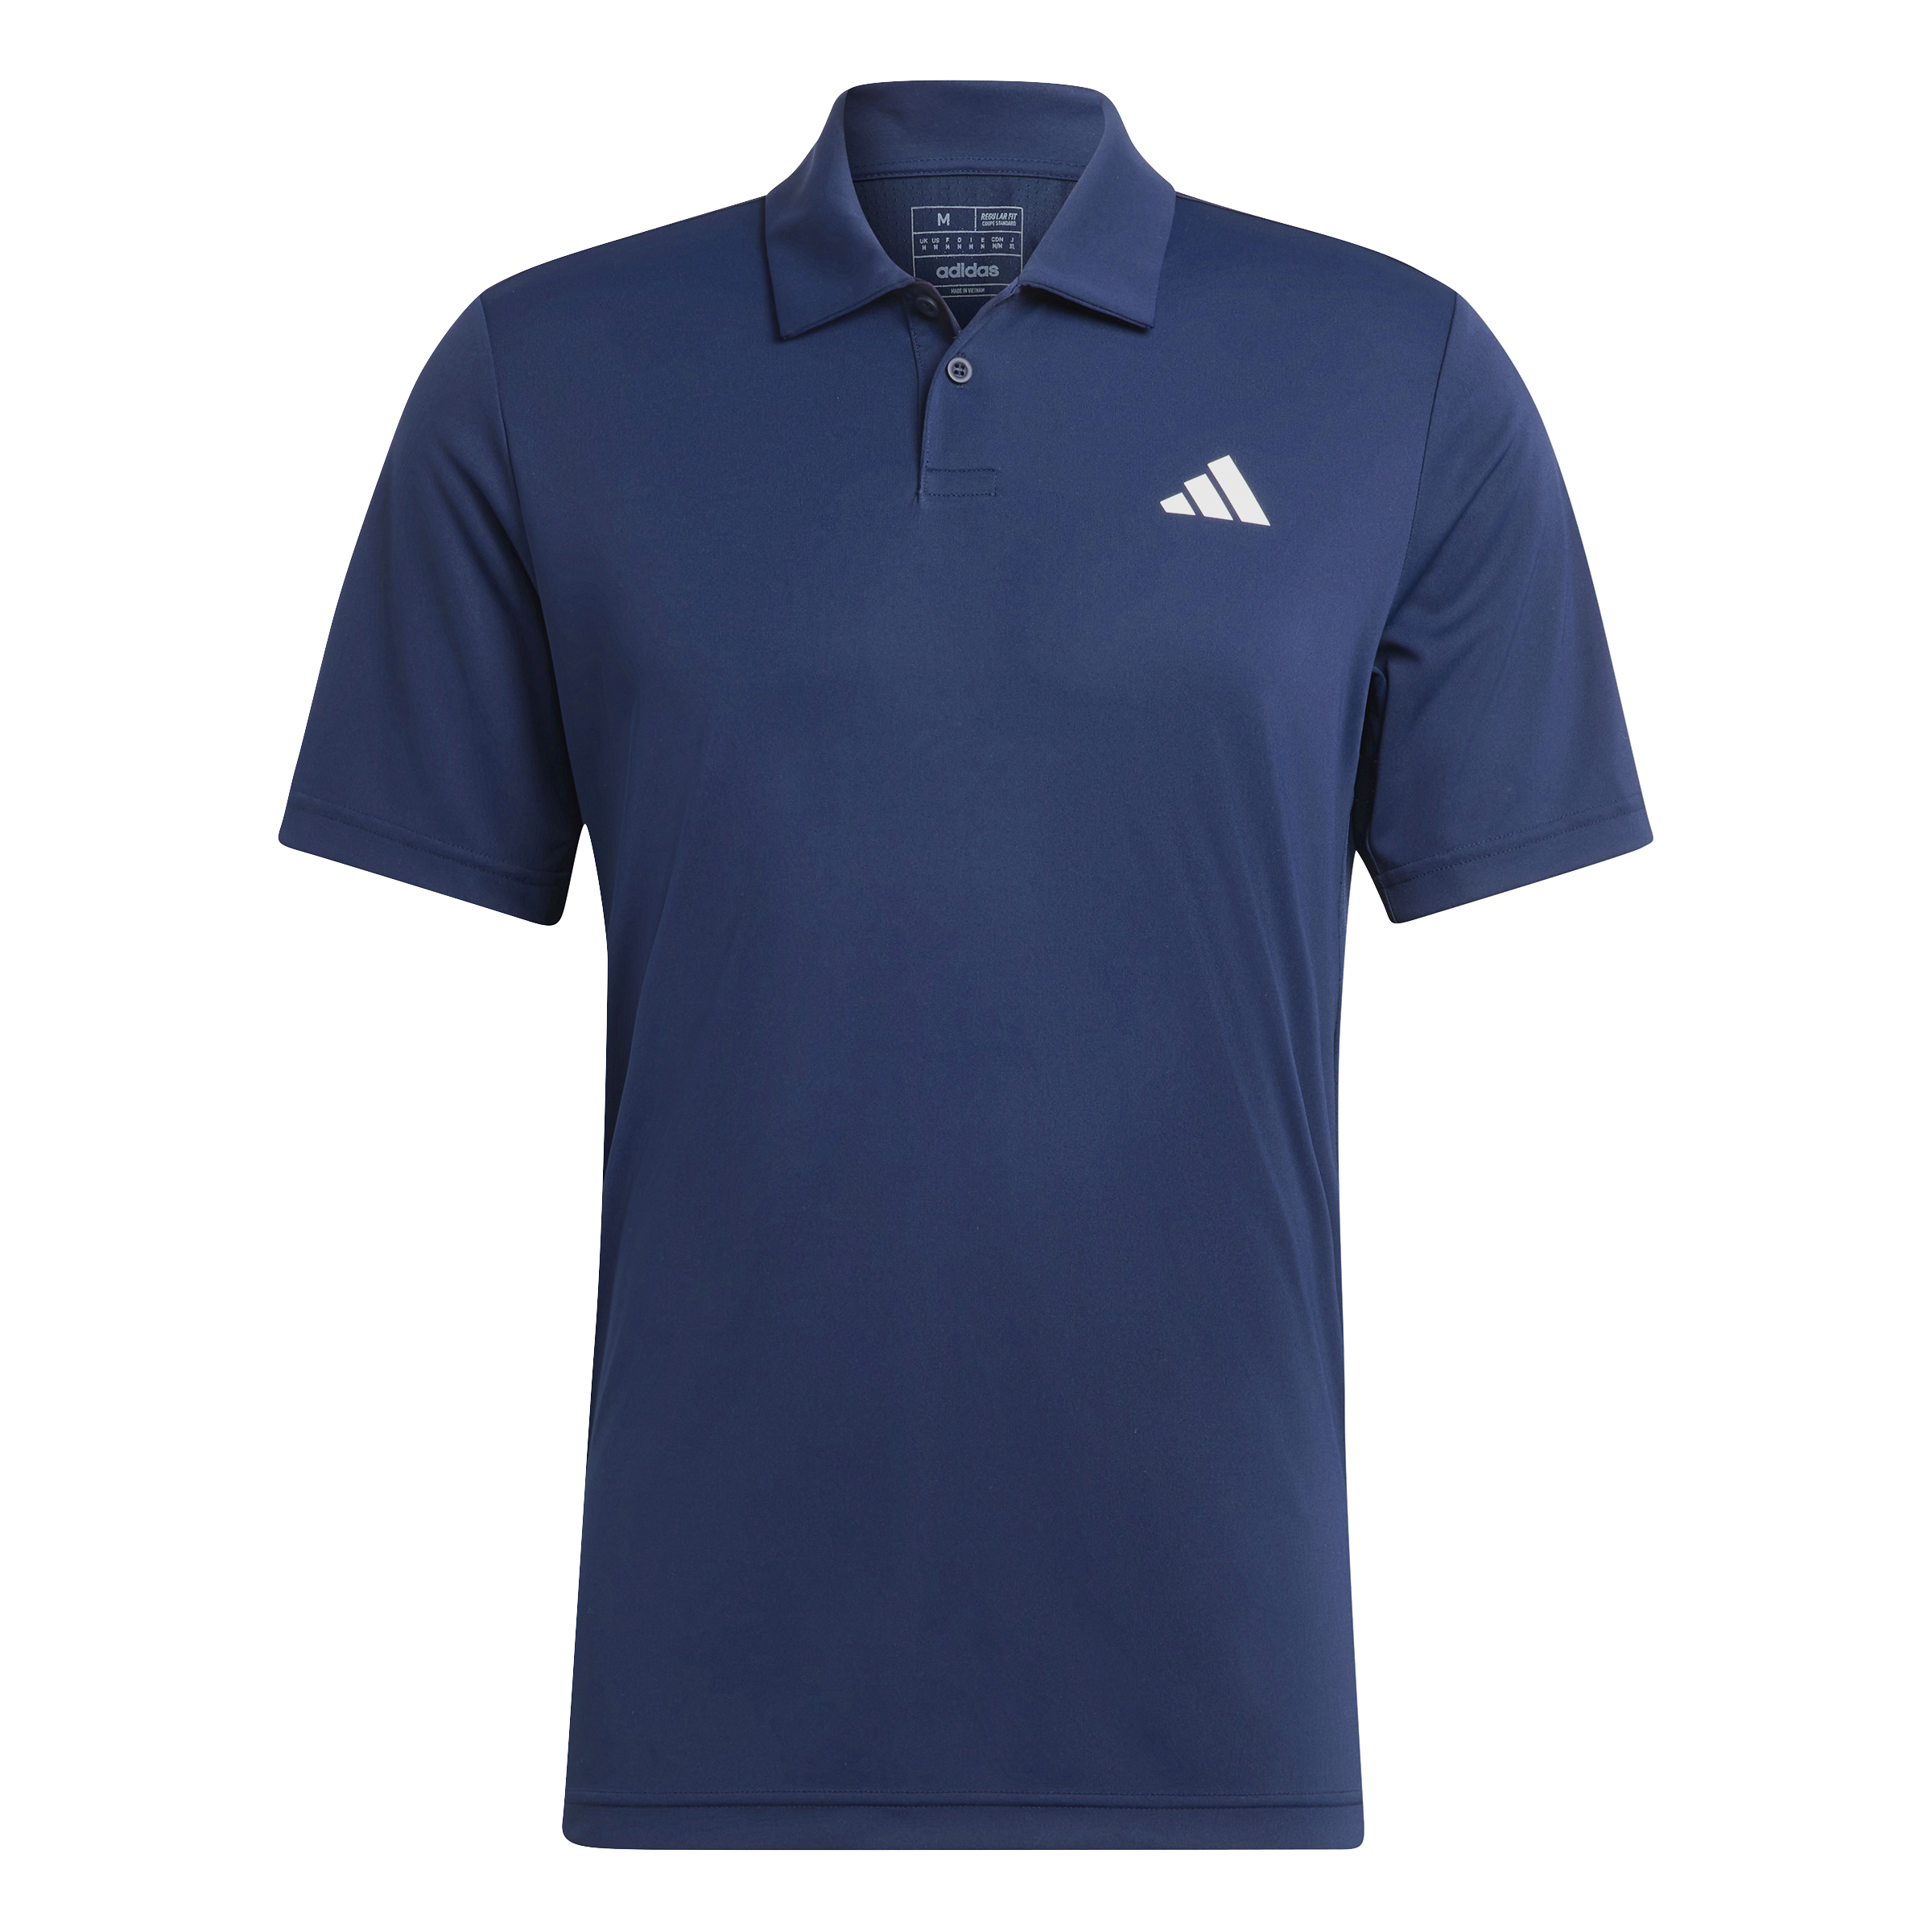 Adidas Club Polo Shirt (Navy) - S